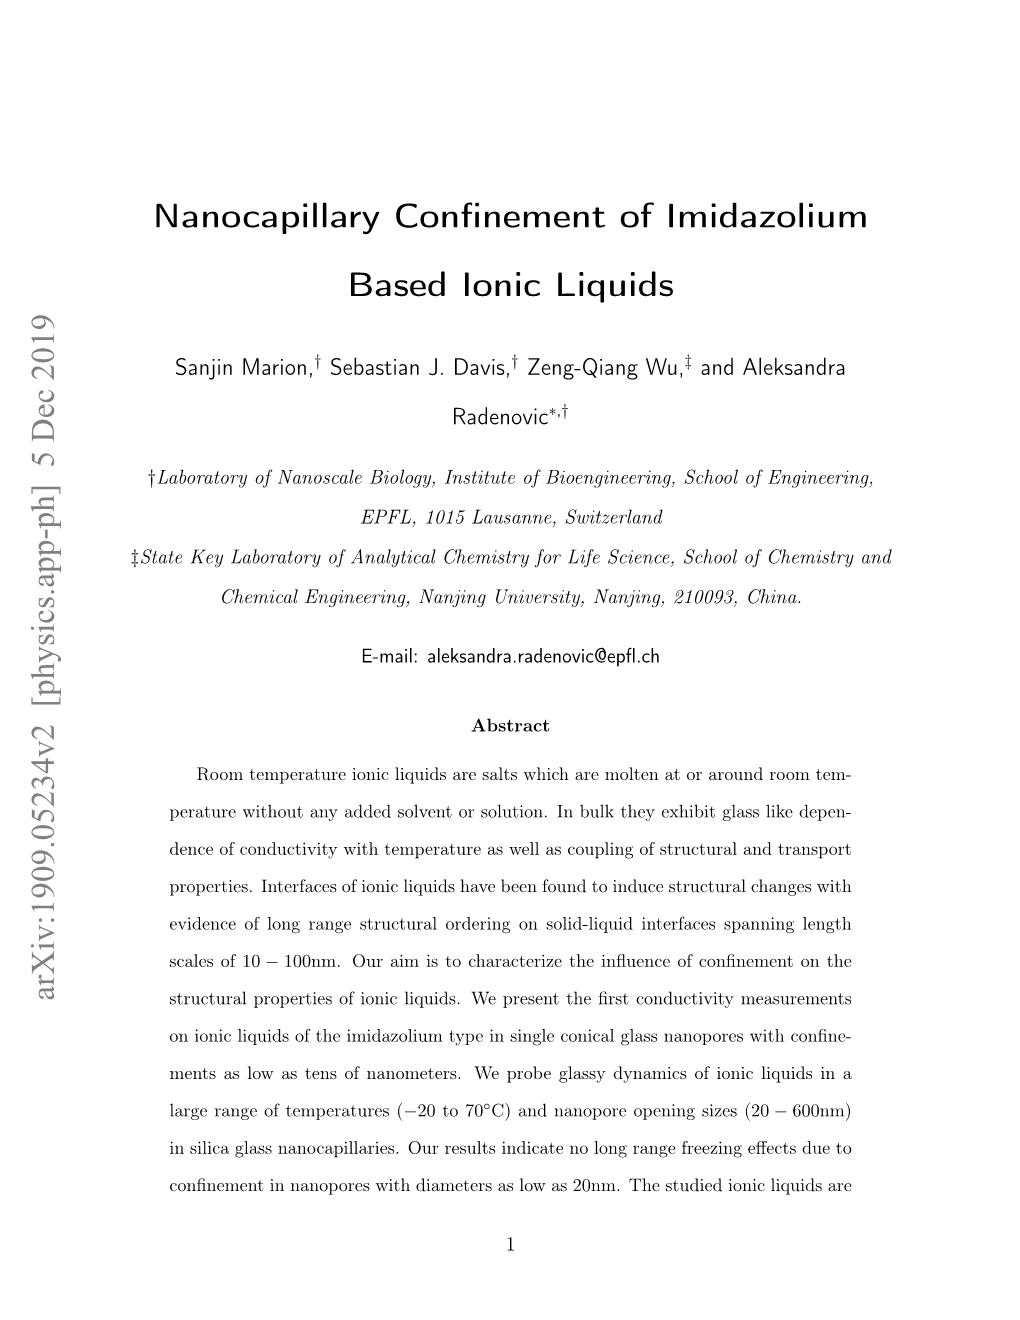 Nanocapillary Confinement of Imidazolium Based Ionic